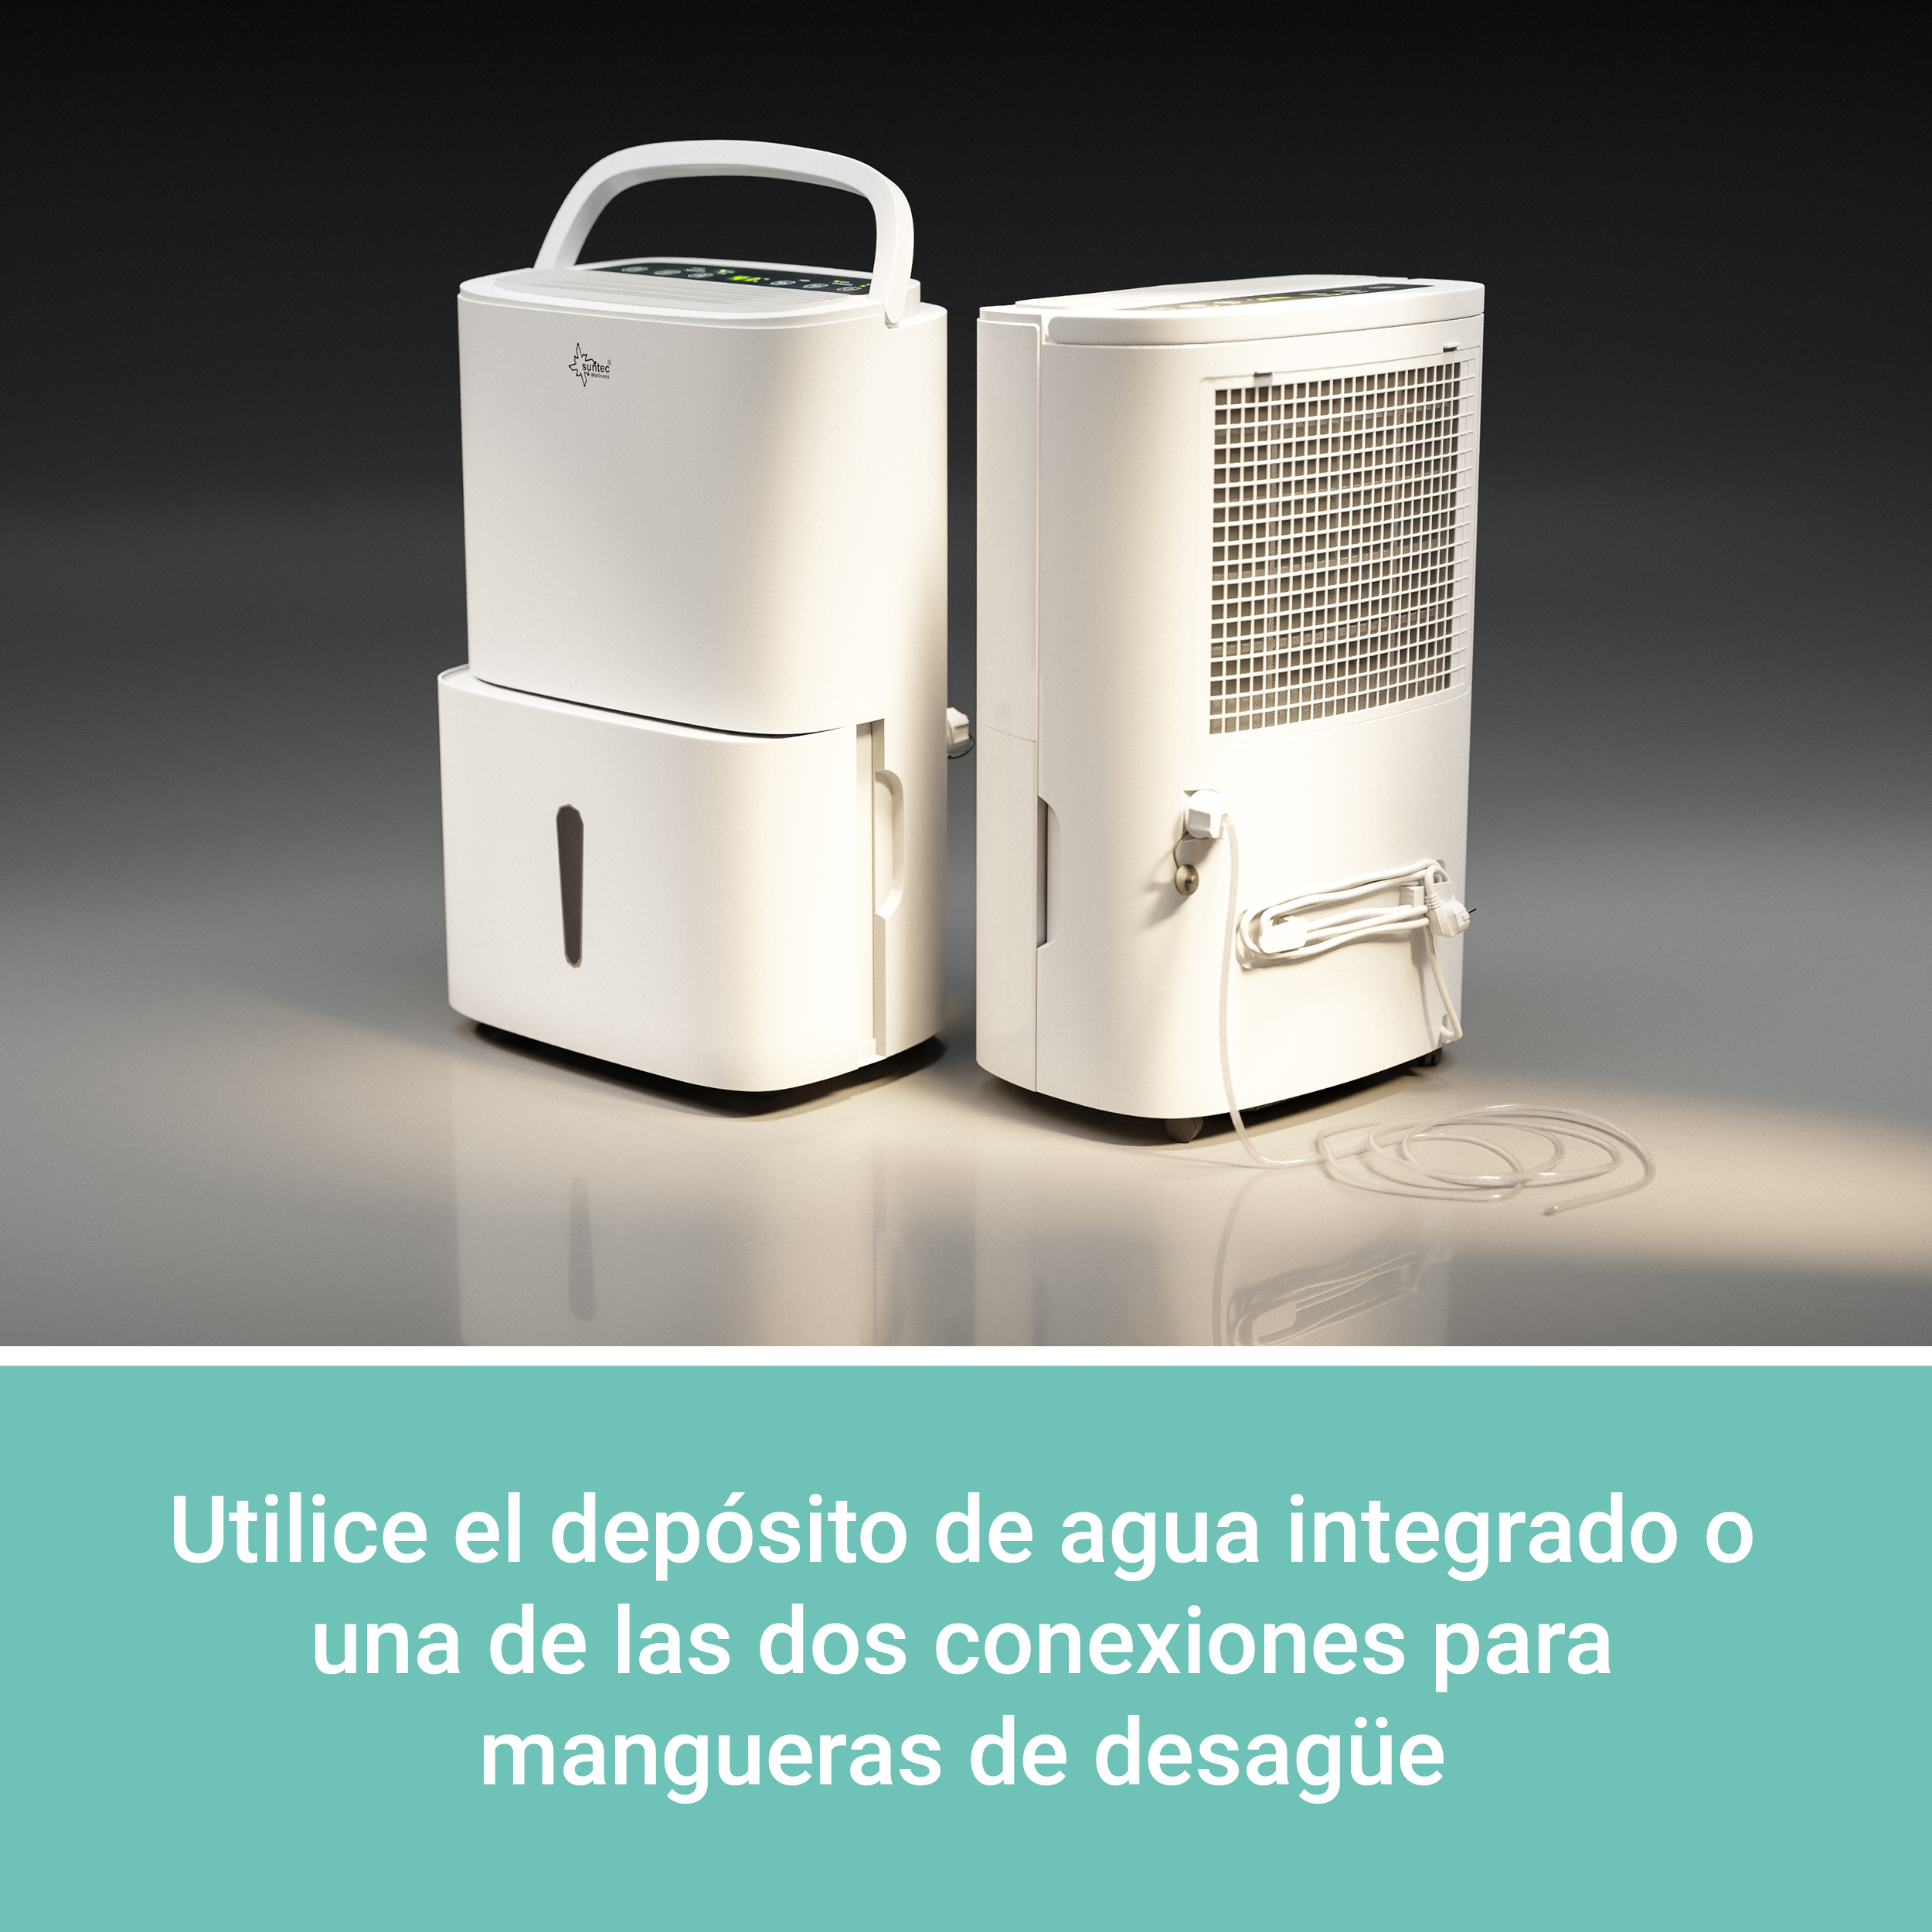 Watt, m²) Select DryFix 50 l/d, 180 50 Entfeuchterleistung: Weiß SUNTEC Raumgröße: Luftentfeuchter App (750